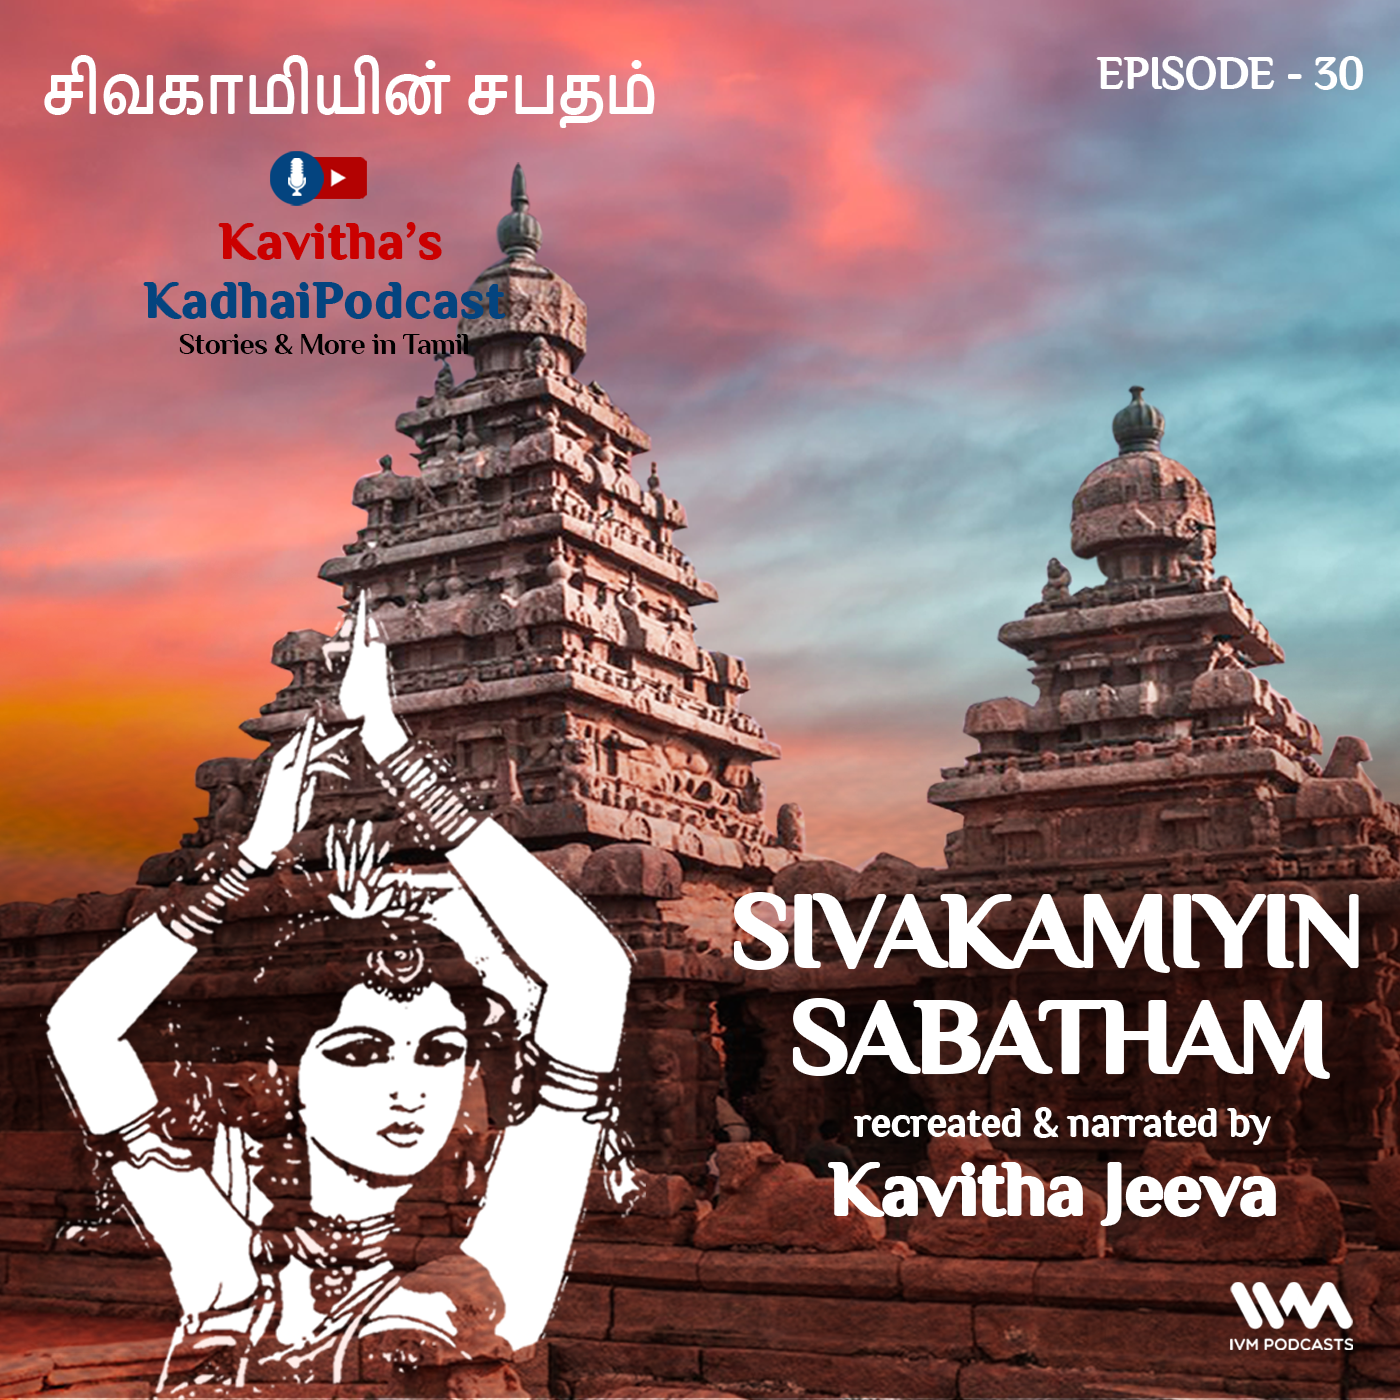 KadhaiPodcast’s Sivakamiyin Sabatham - Episode # 30